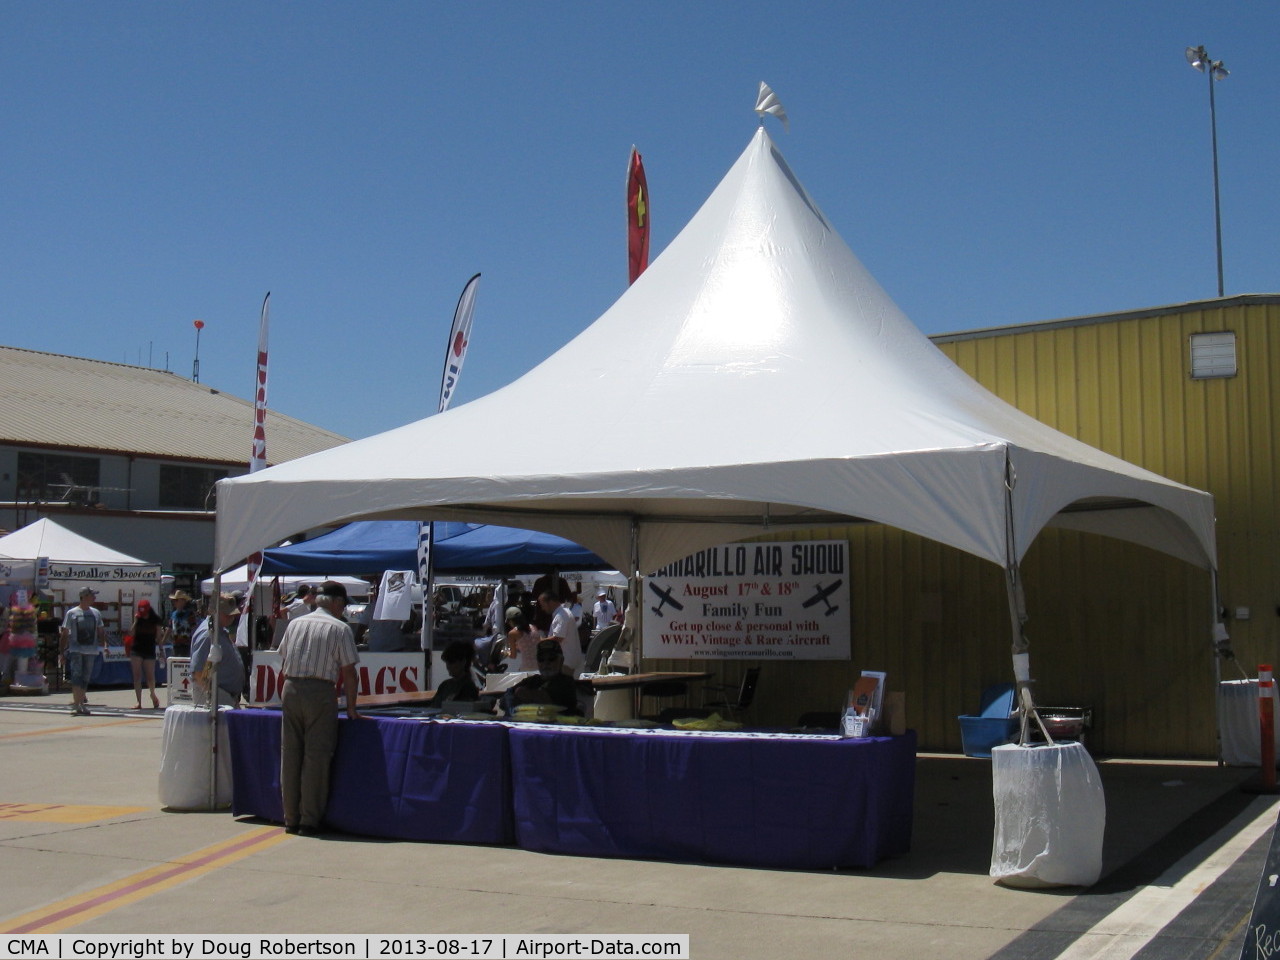 Camarillo Airport (CMA) - Wings Over Camarillo Airshow 2013, Airshow Information Booth